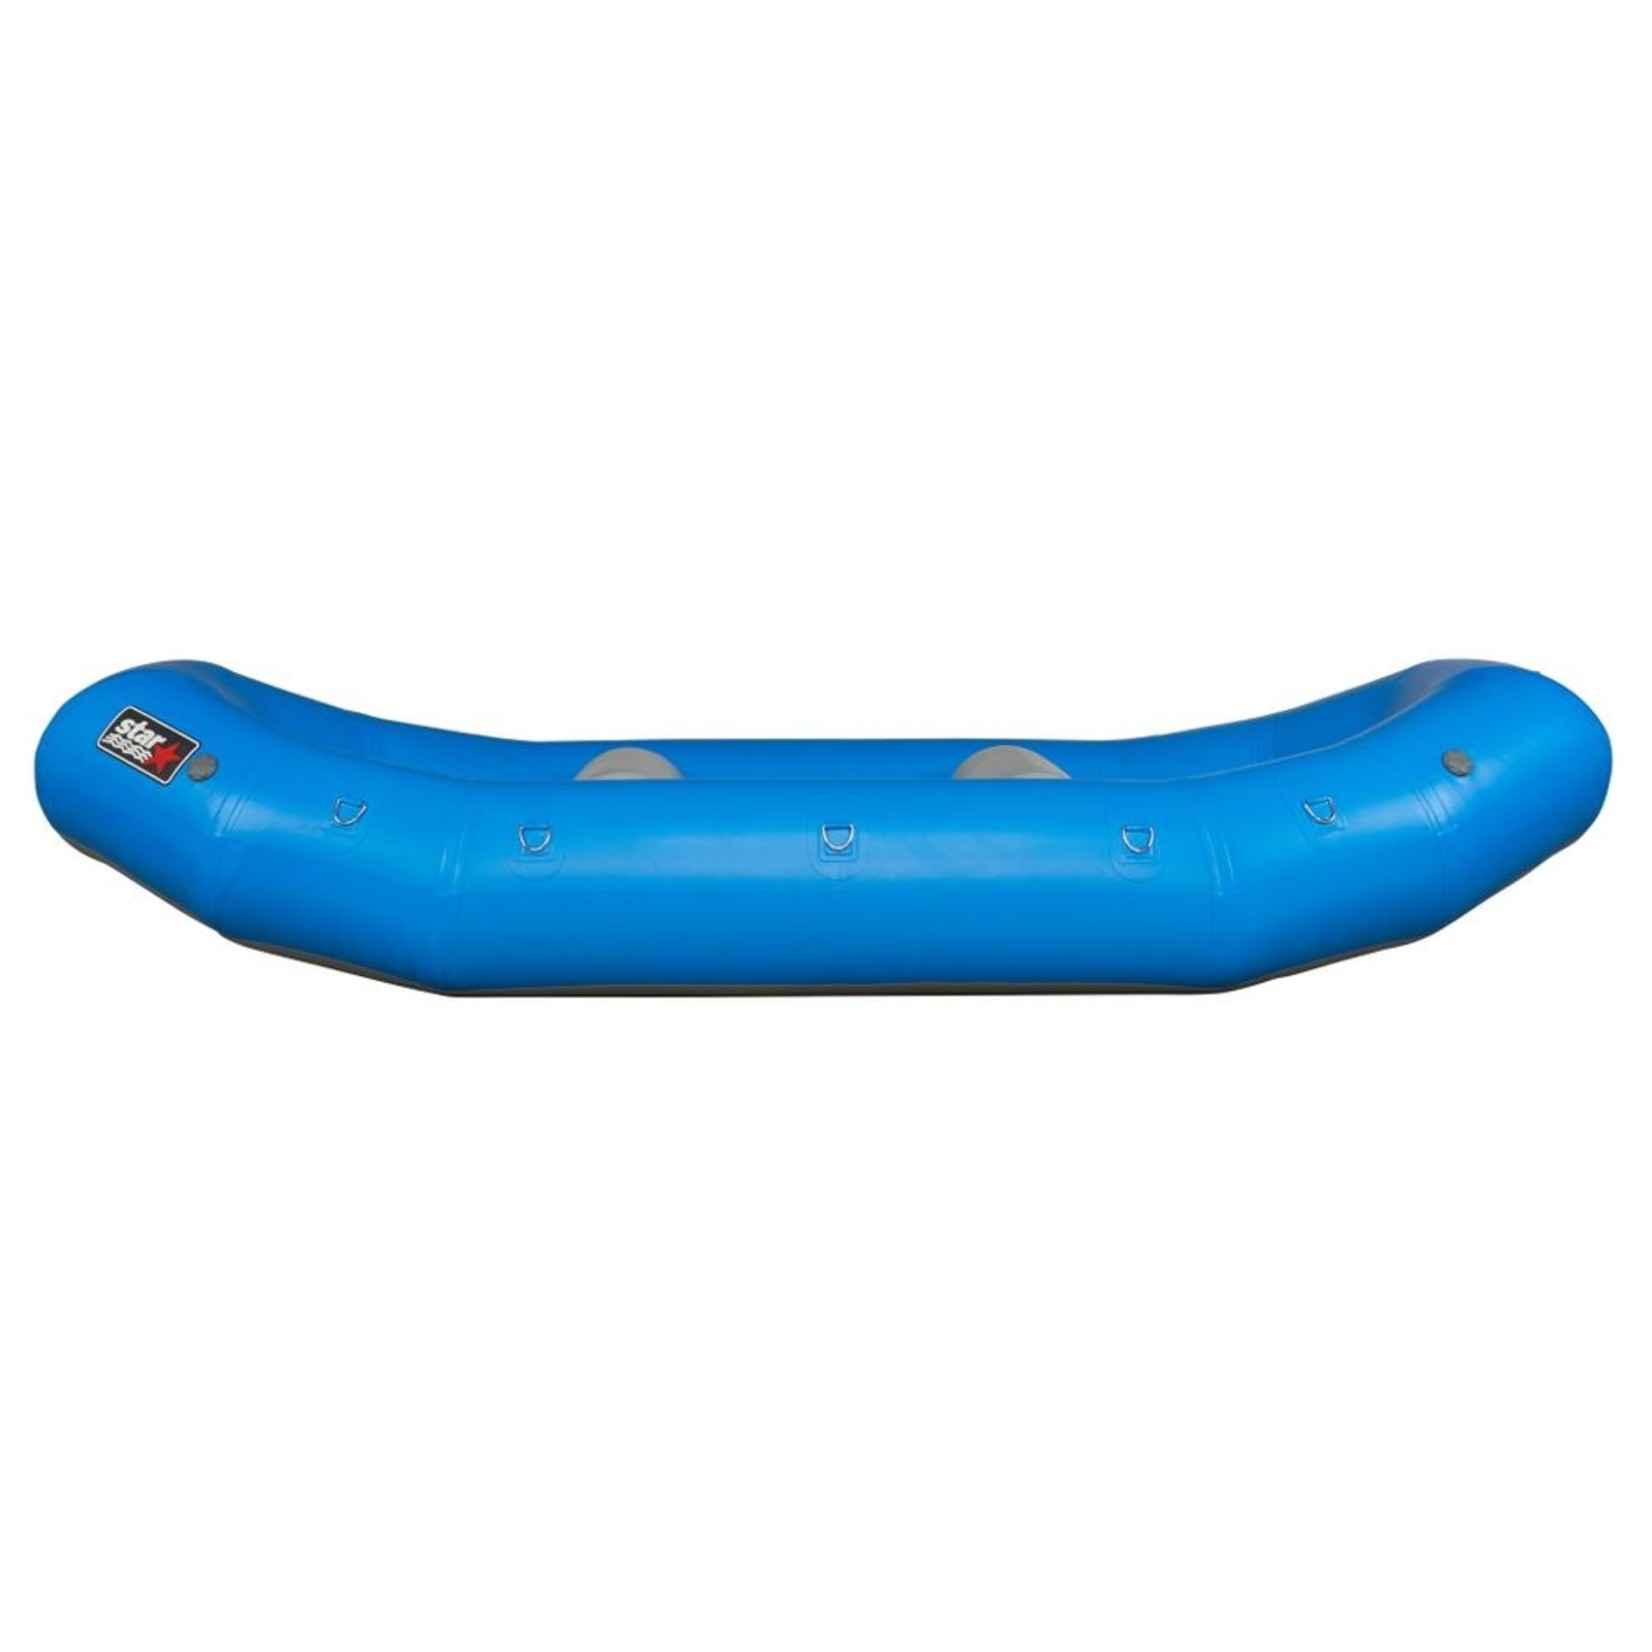 STAR Inflatables STAR Select Thunder Self-Bailing Raft